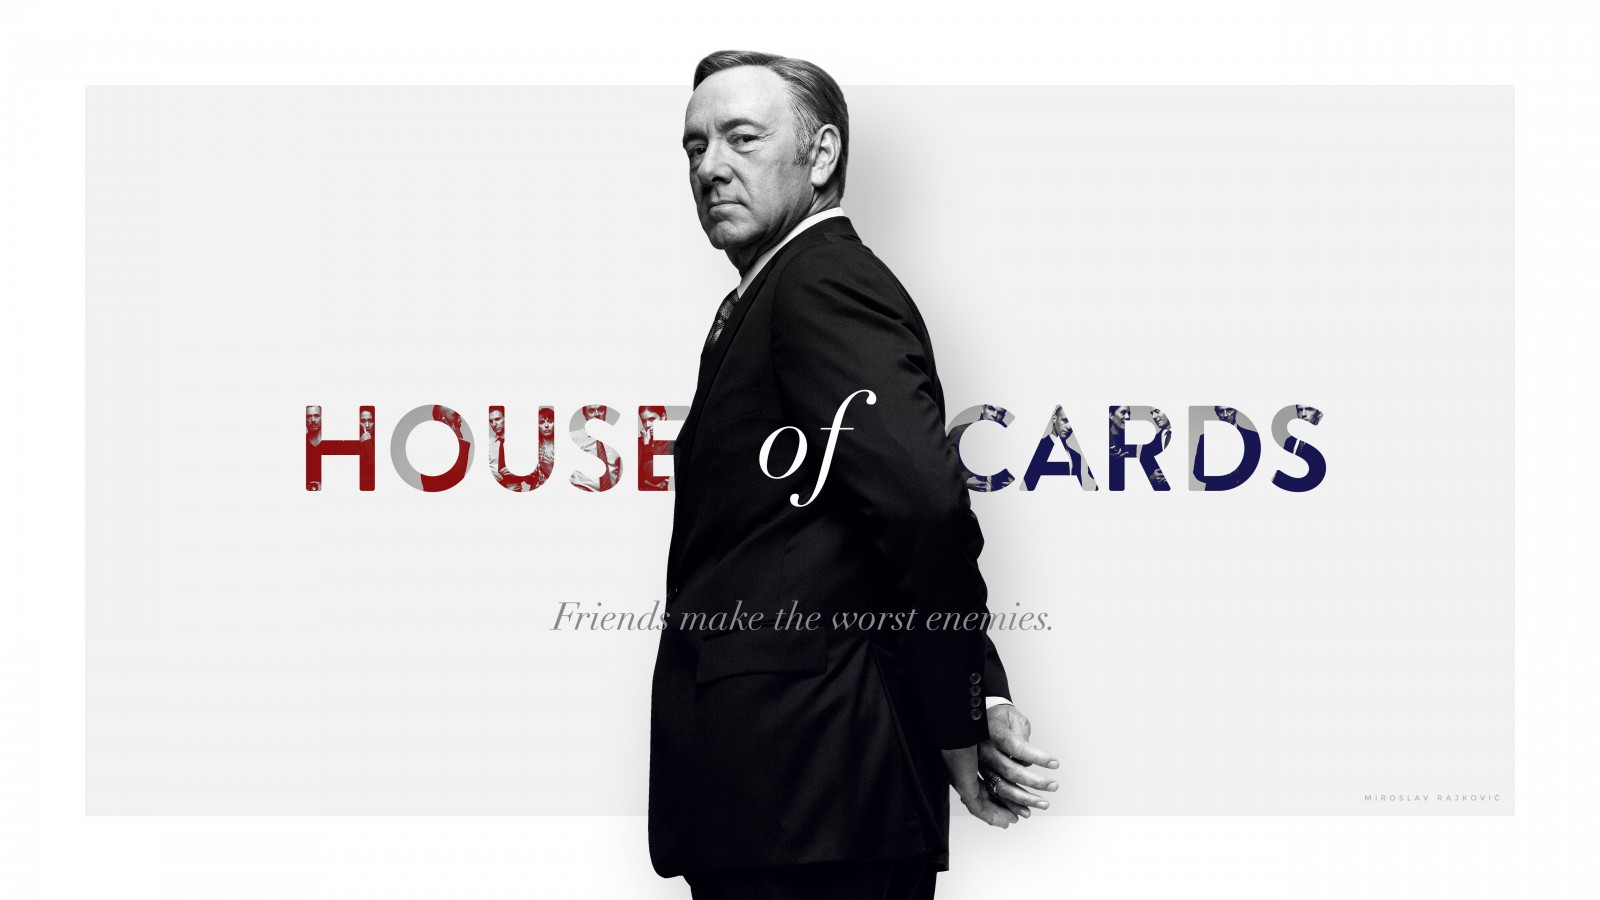 Frank Underwood - House of Cards Wallpaper for Desktop 1600x900